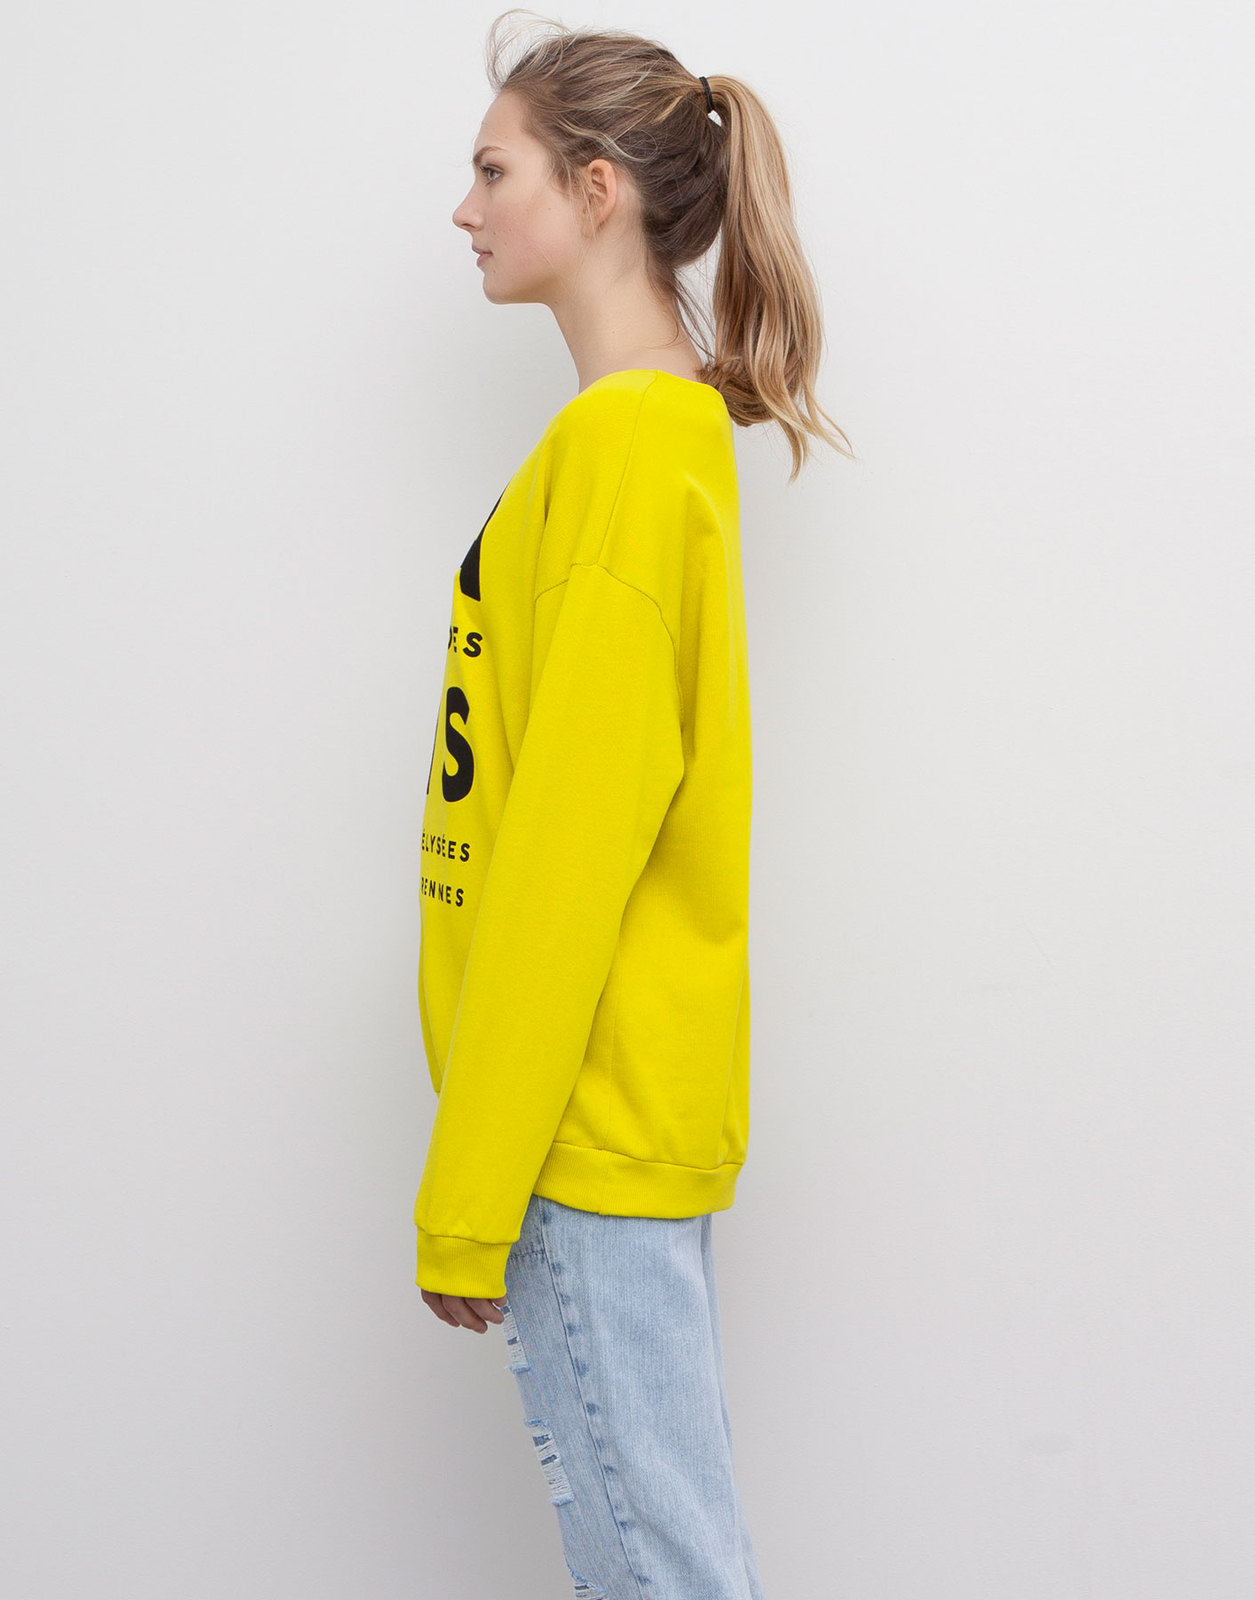 Pull and Bear "PARIS" feliratos sárga pulóver 2015.02.23 fotója